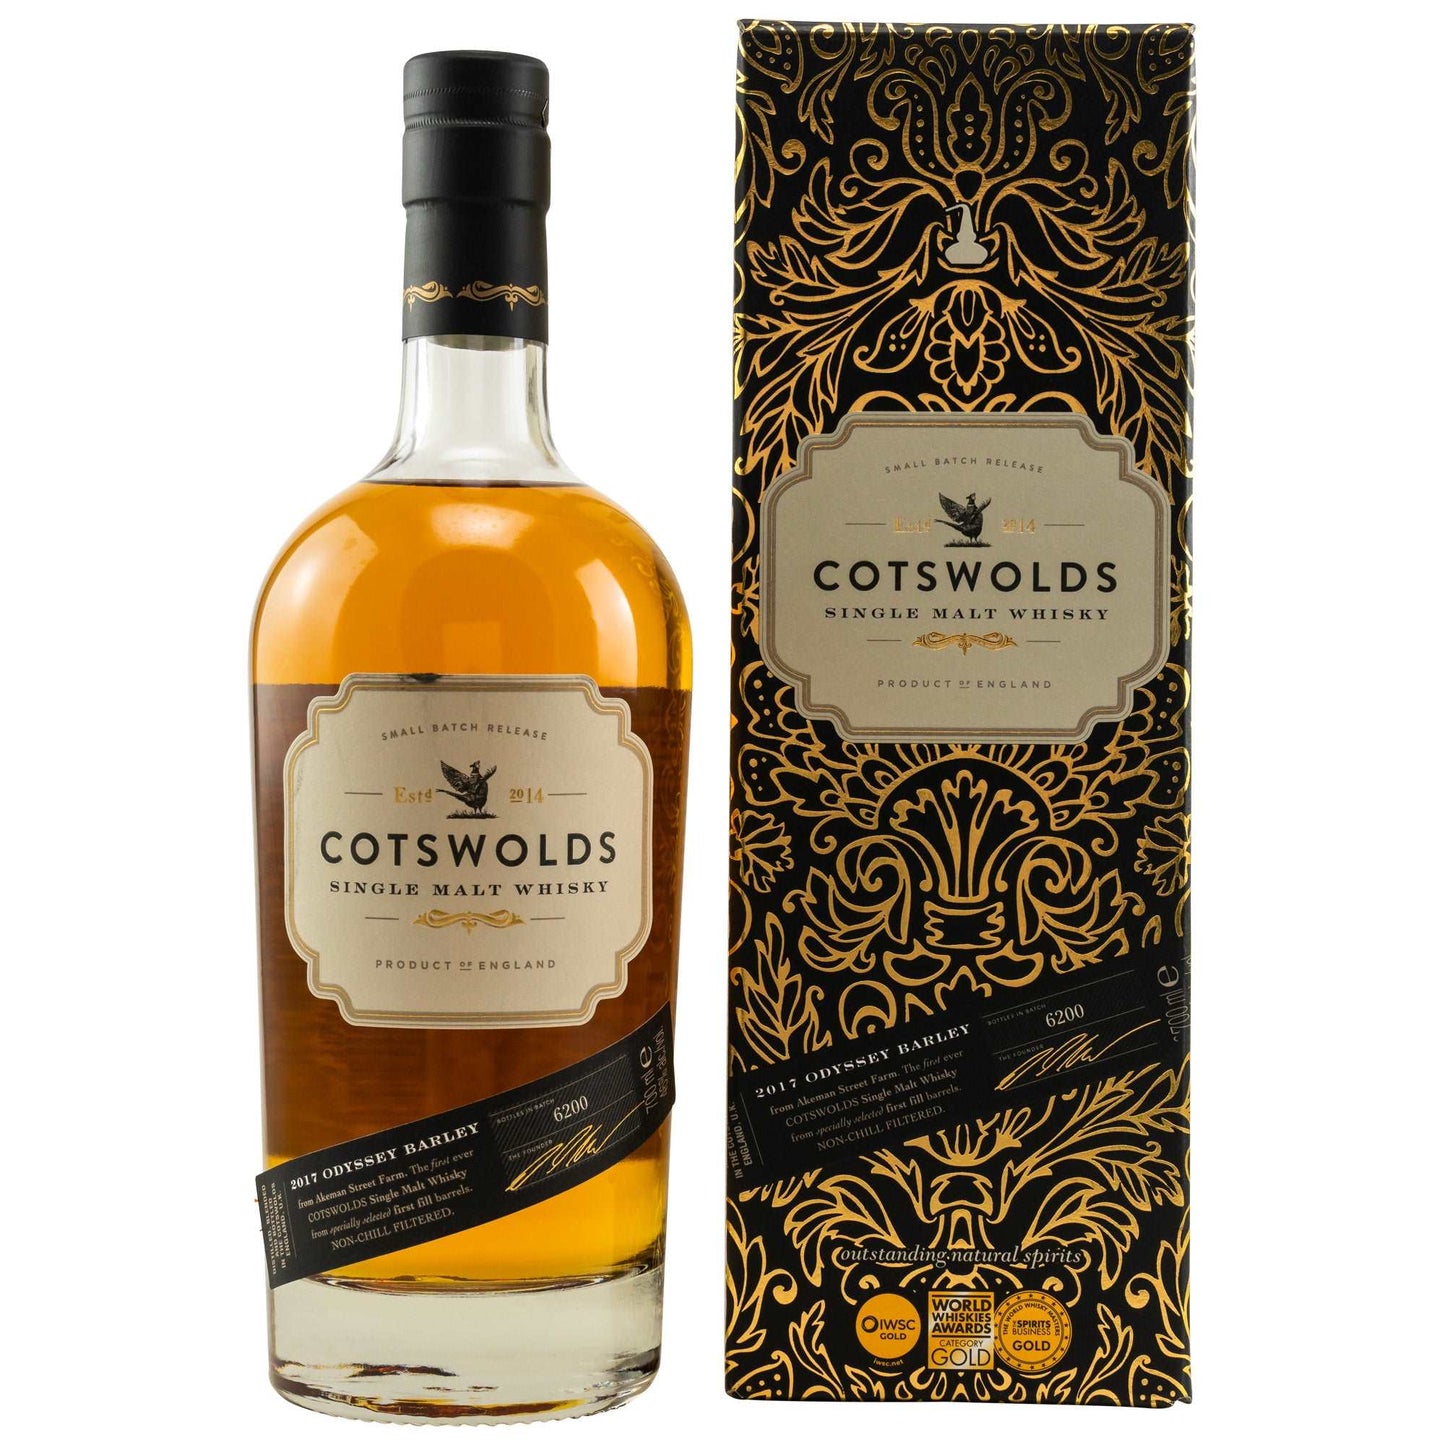 Cotswolds | 2017 Odyssey Barley | Single Malt English Whisky | 0,7l | 46%GET A BOTTLE